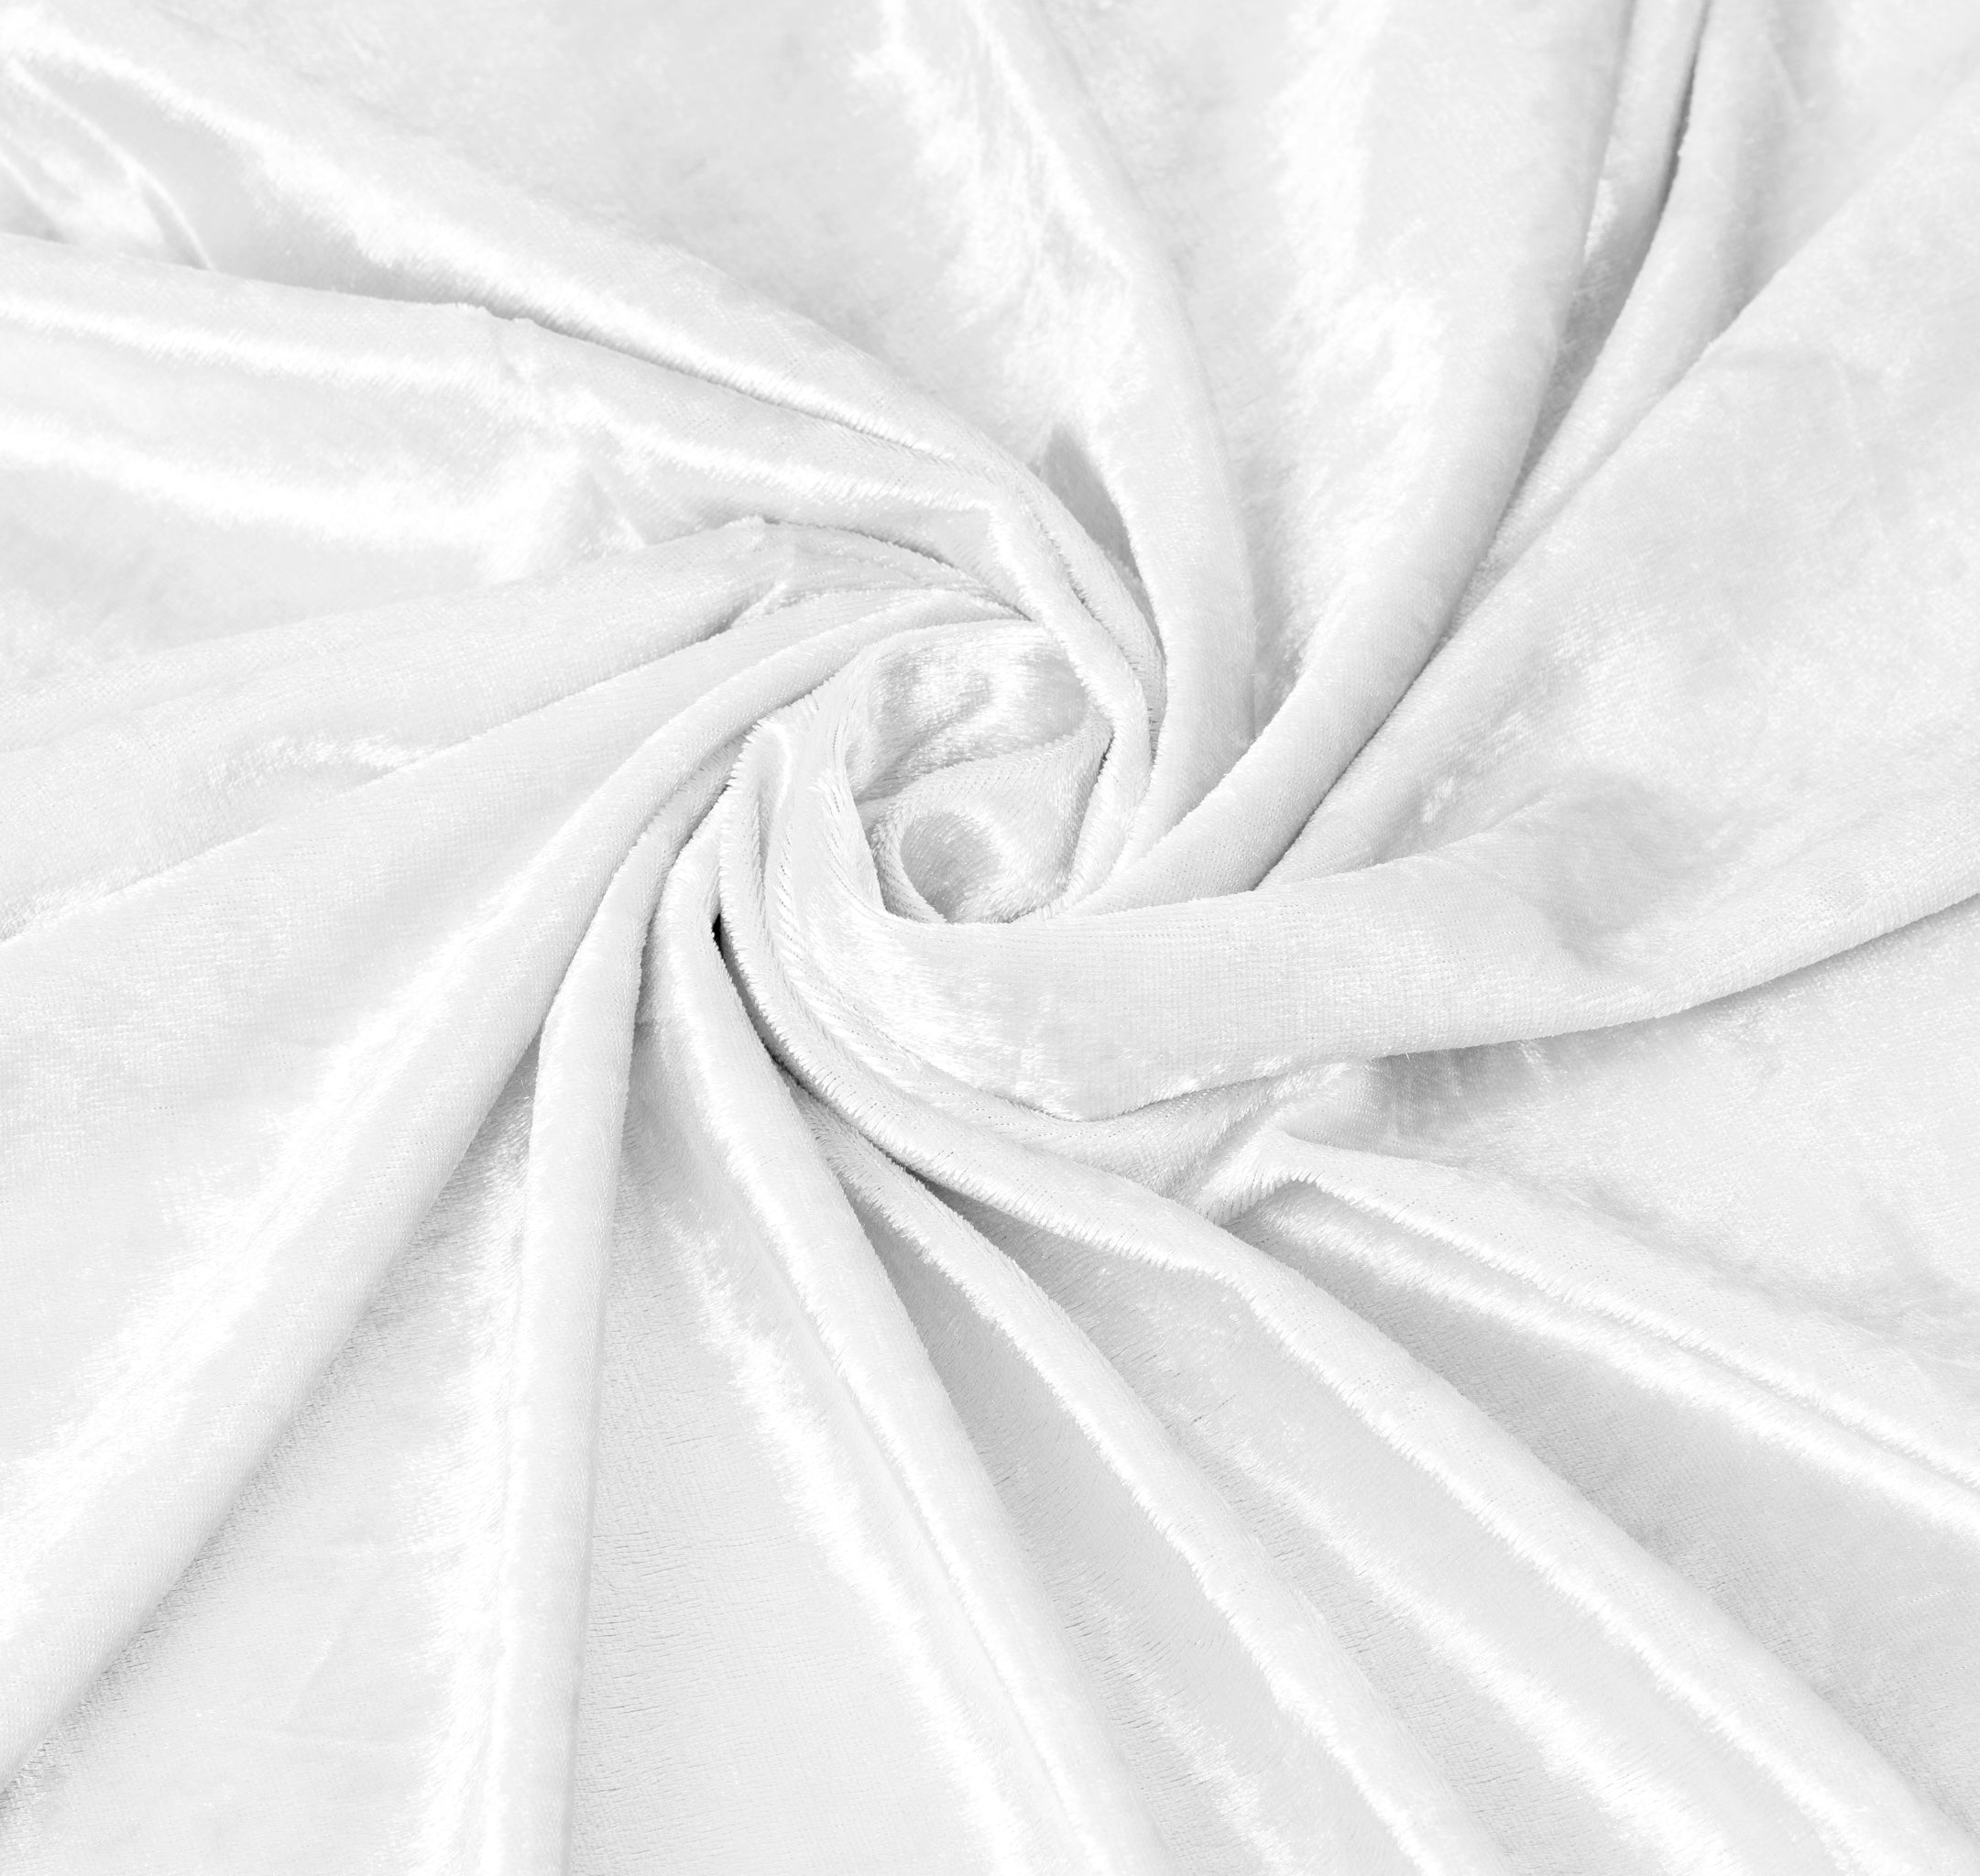 10 yards Velvet Fabric Roll - Dark Dusty Rose/Mauve– CV Linens